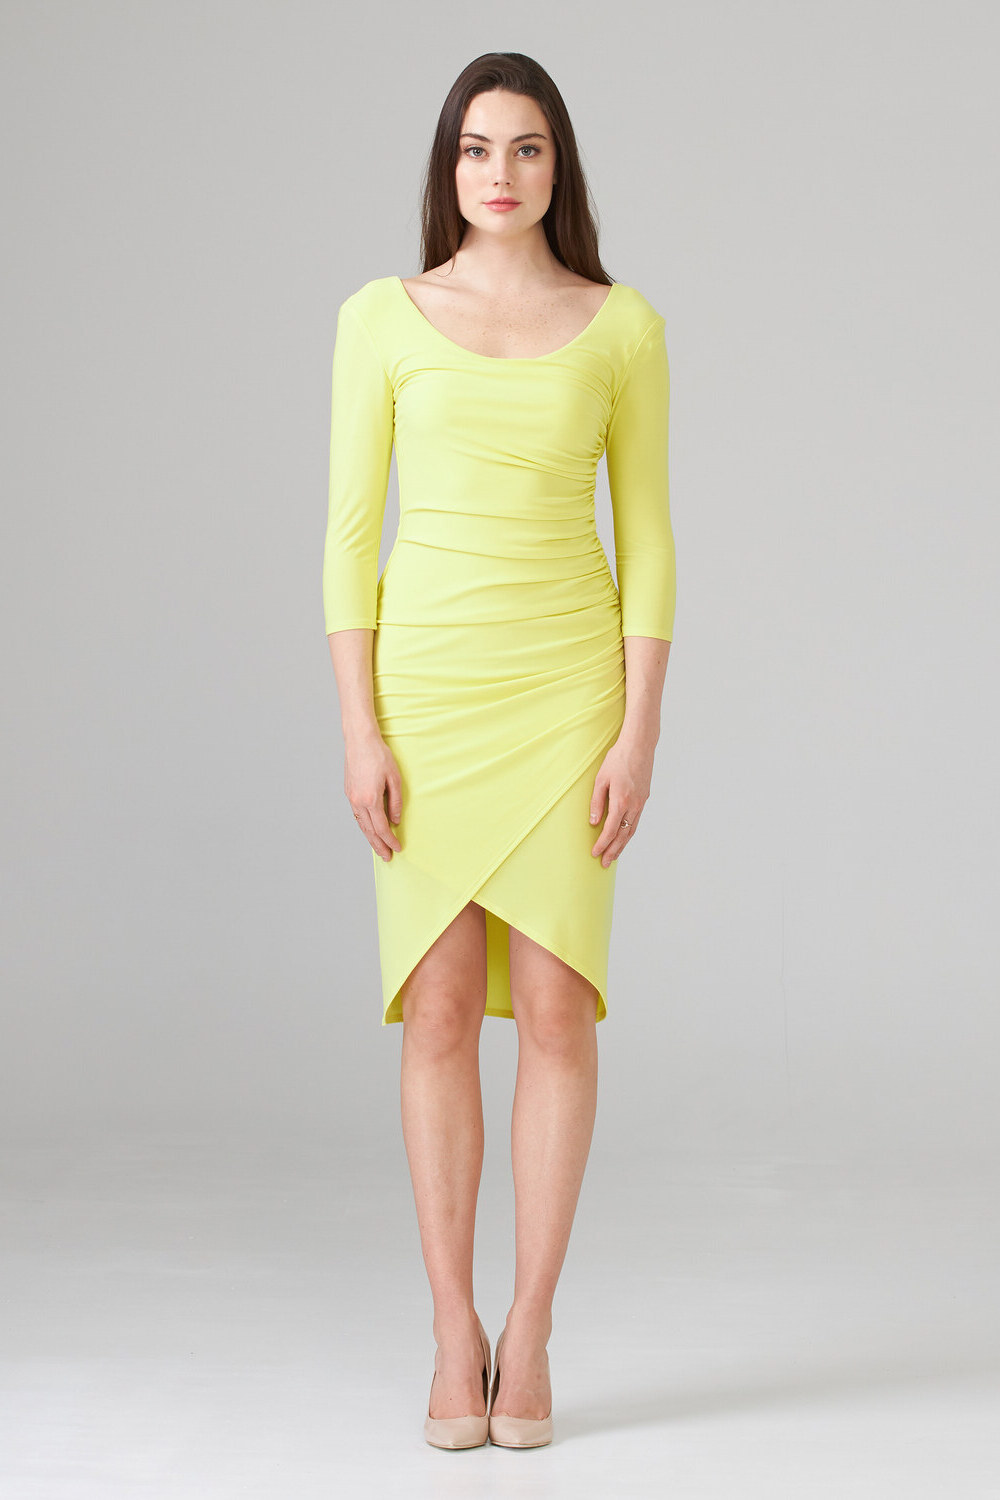 Joseph Ribkoff Dress Style 201537. Zest